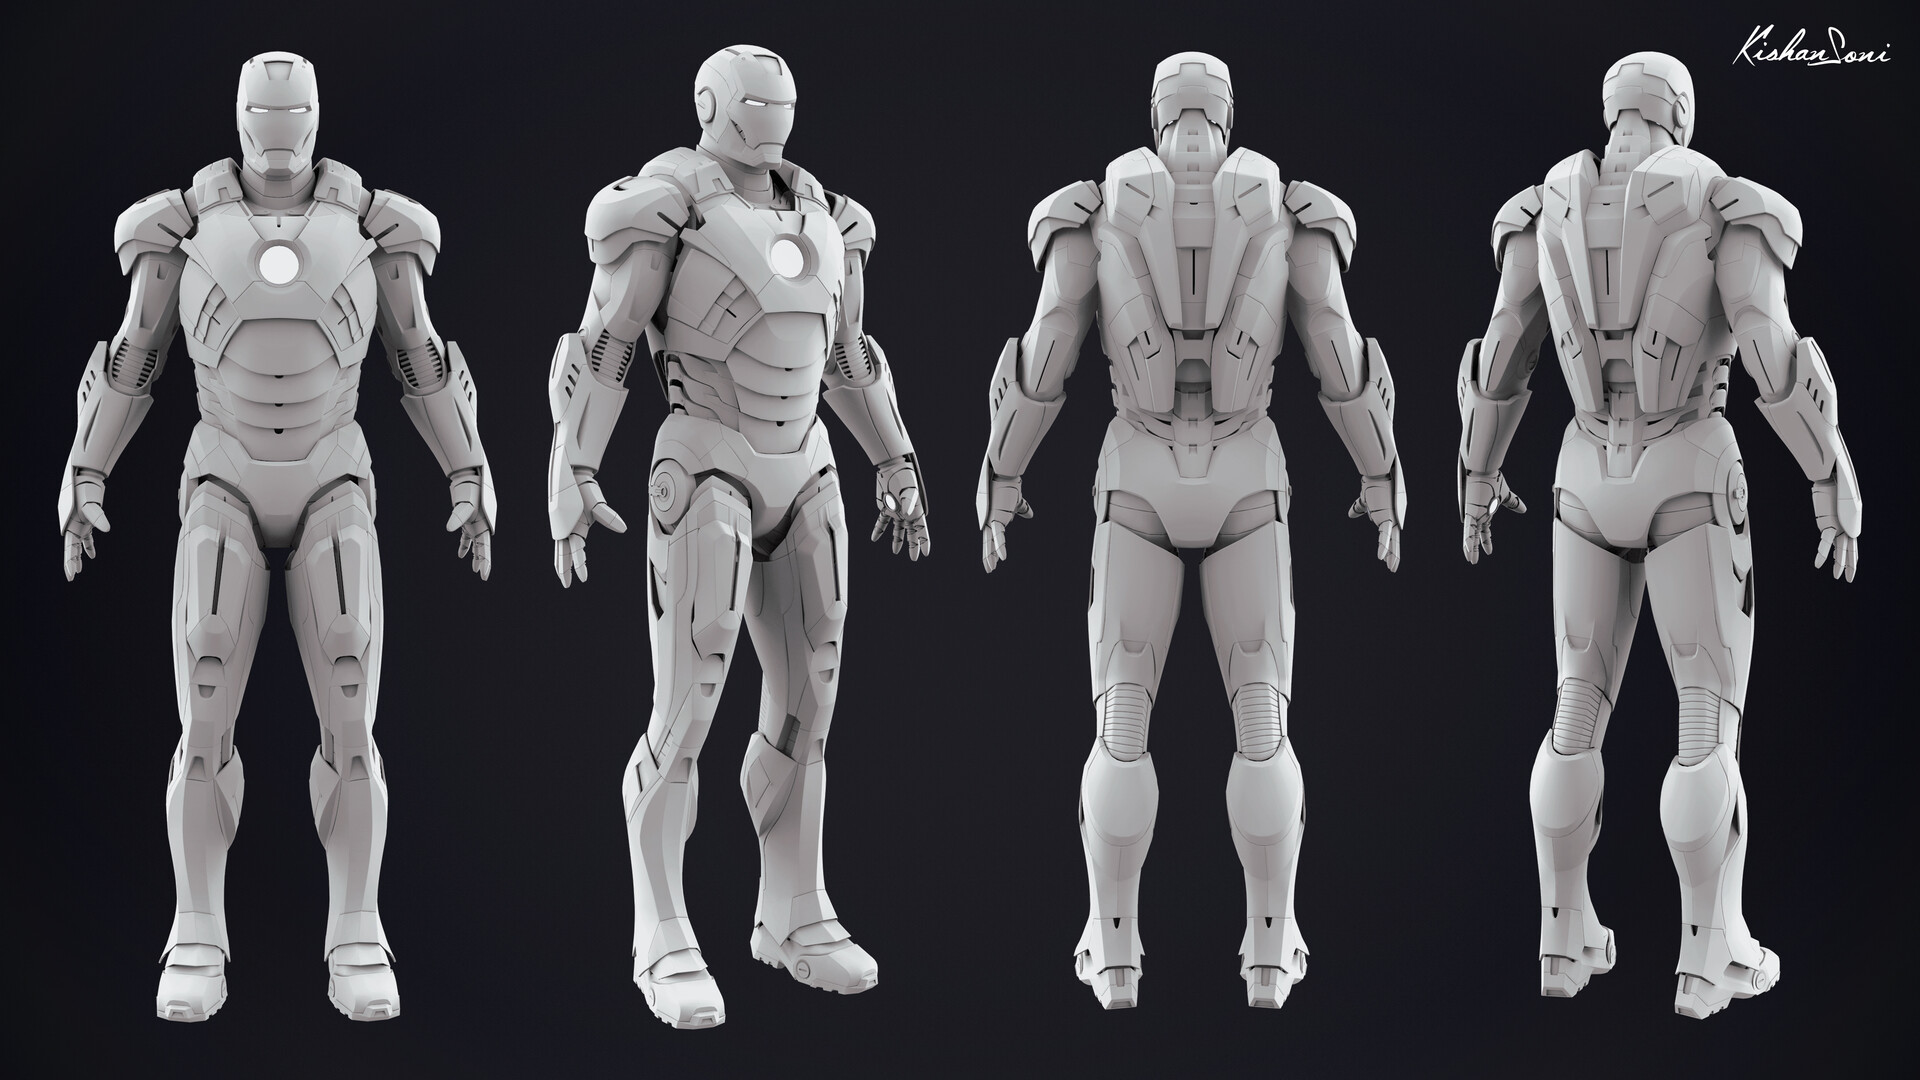 ArtStation - Iron Man Mk7 - 3D Model